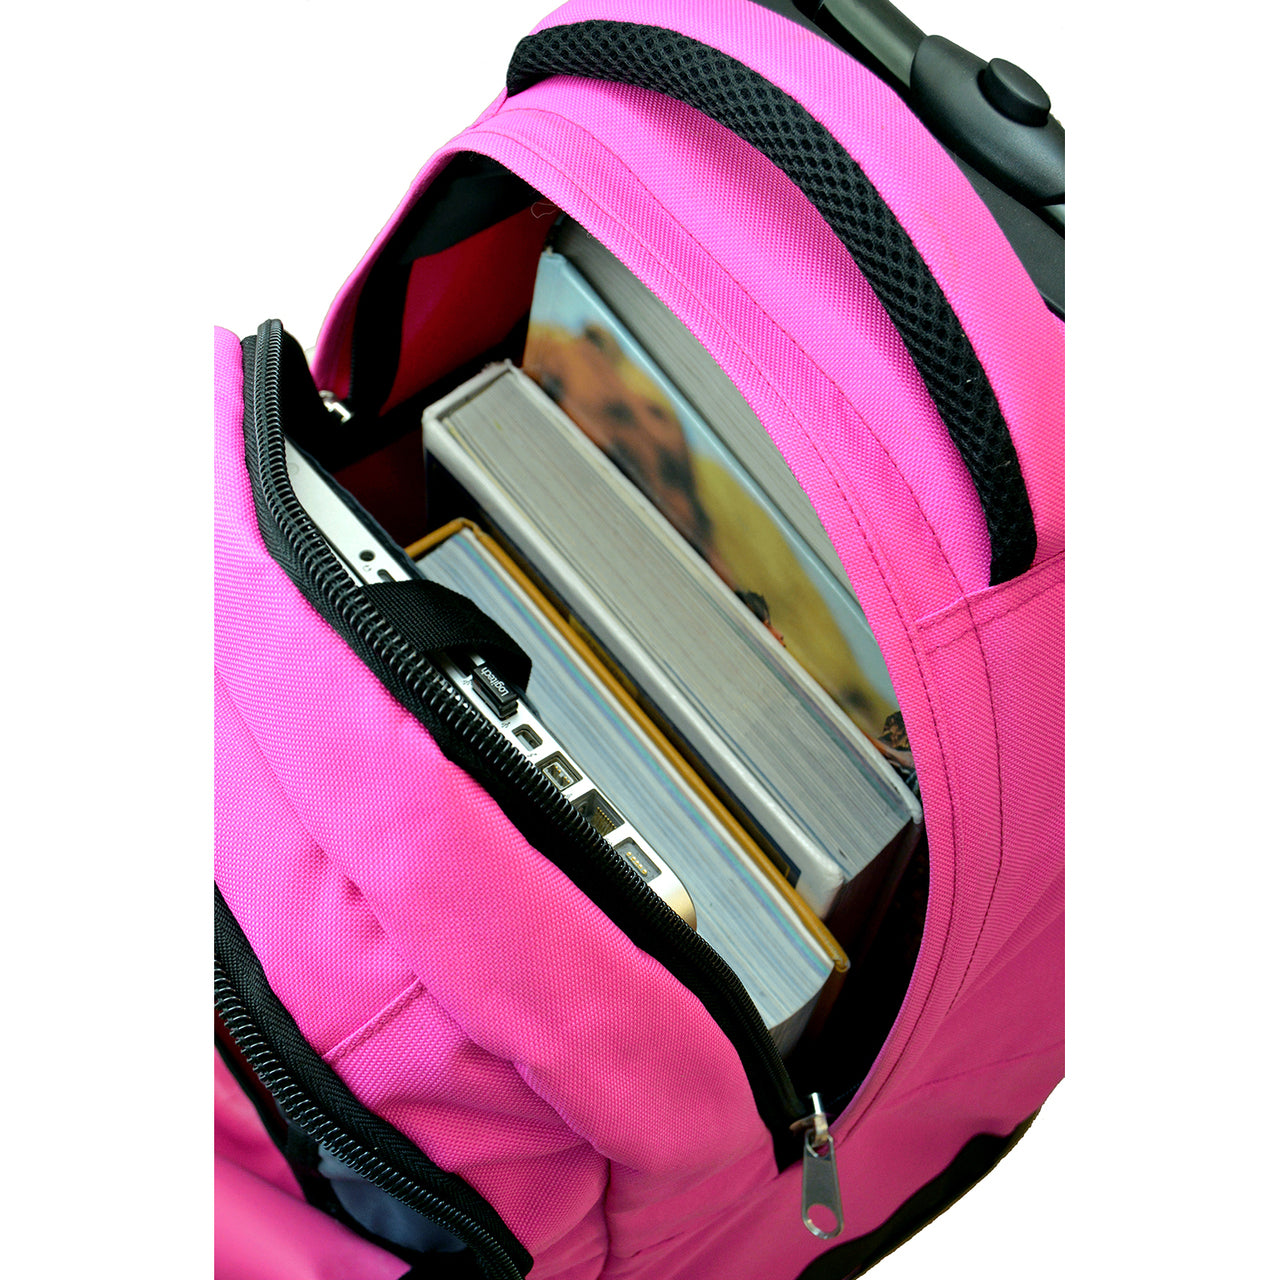 Minnesota Twins Premium Wheeled Backpack in Pink